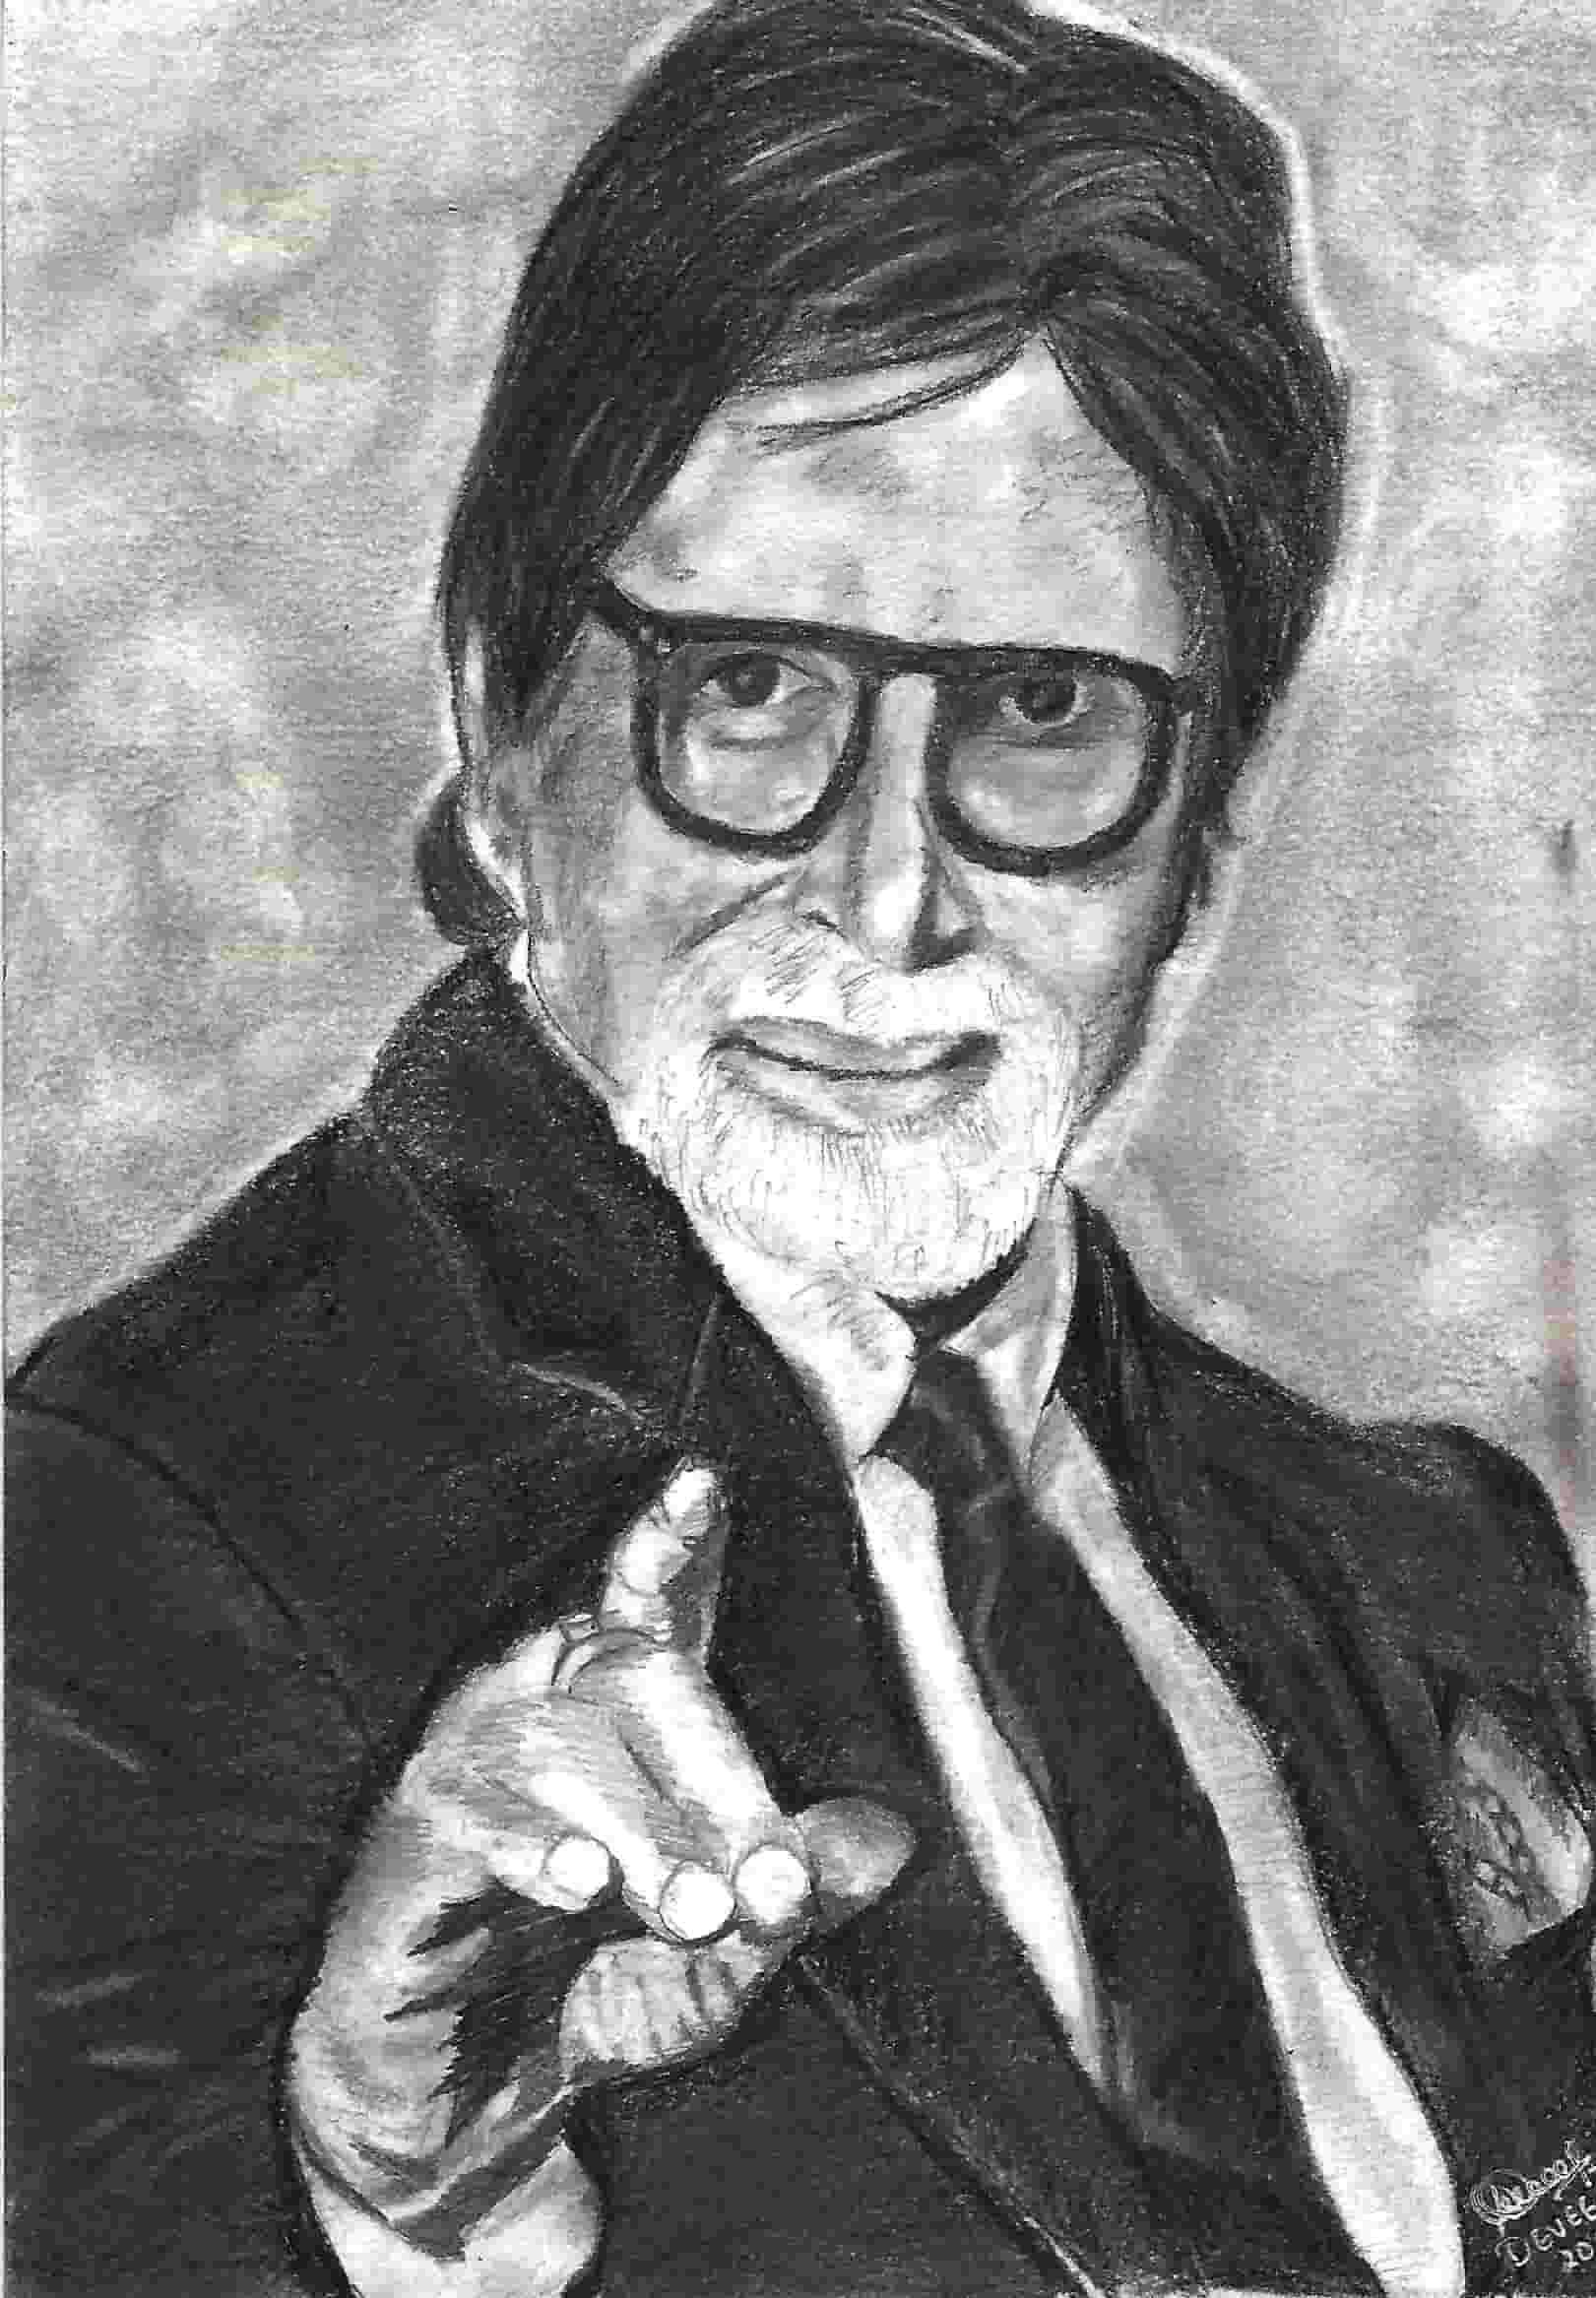 Pencil Sketch of Amitabh Bachchan